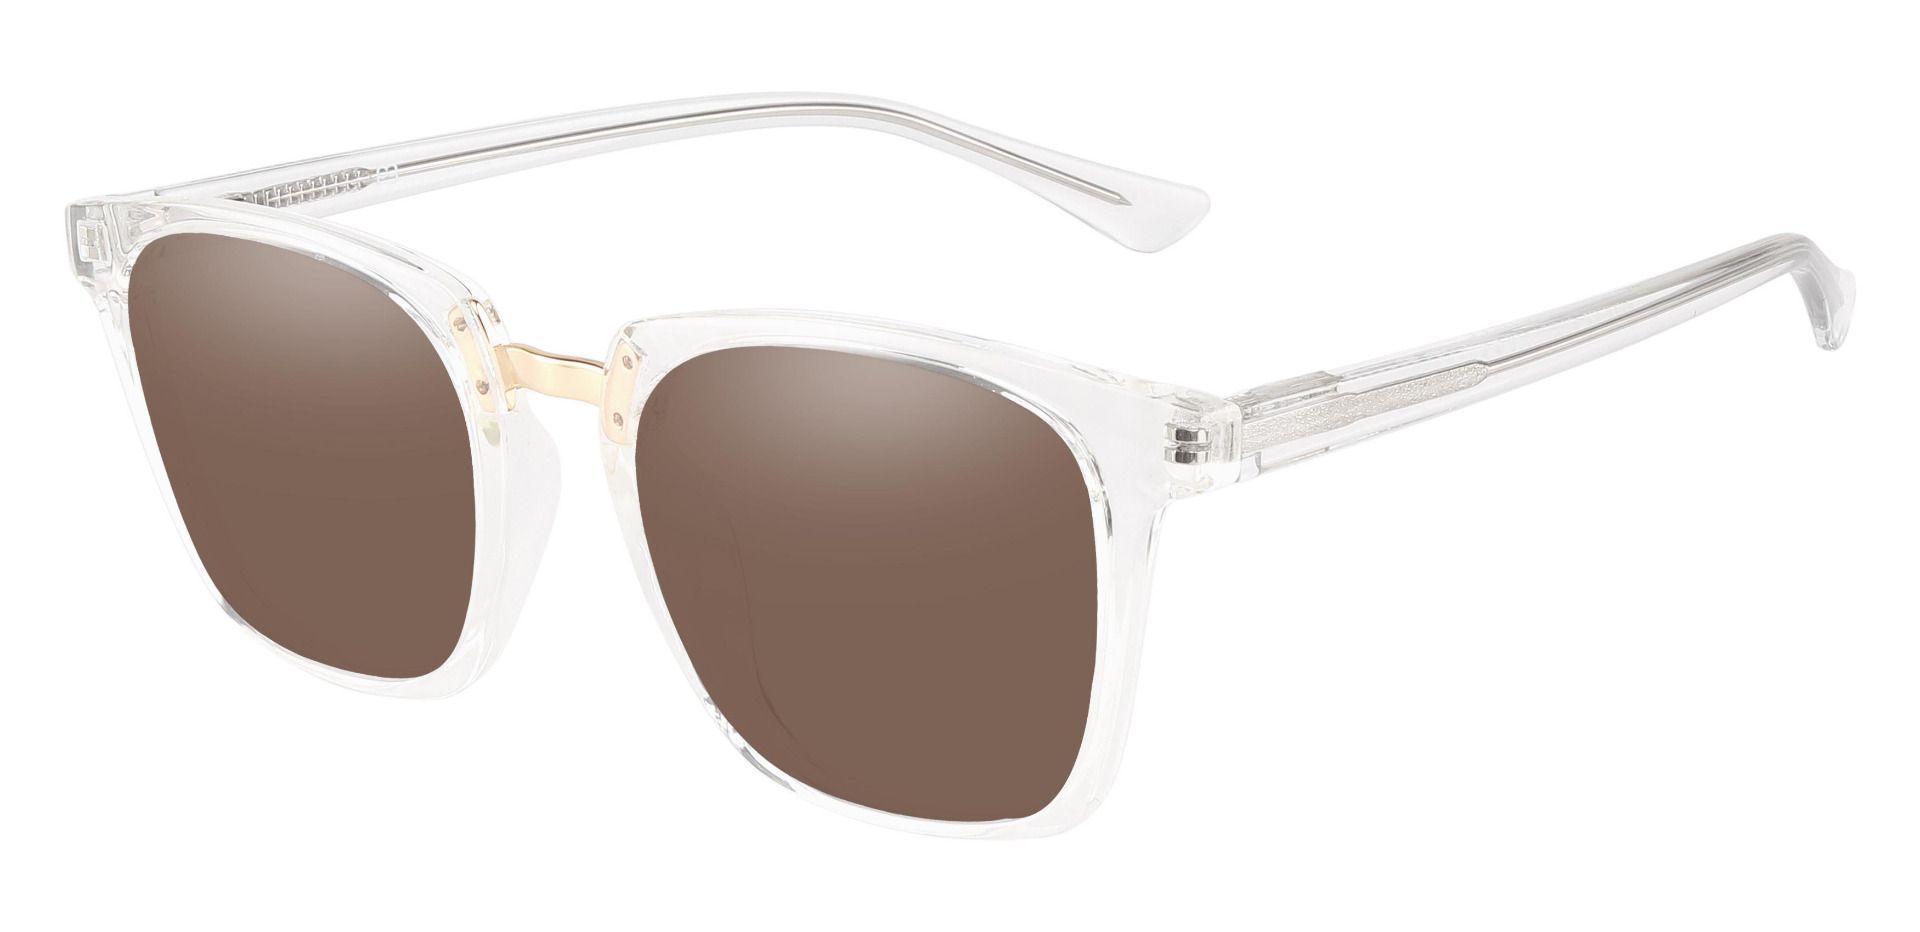 Delta Square Prescription Sunglasses - Clear Frame With Brown Lenses